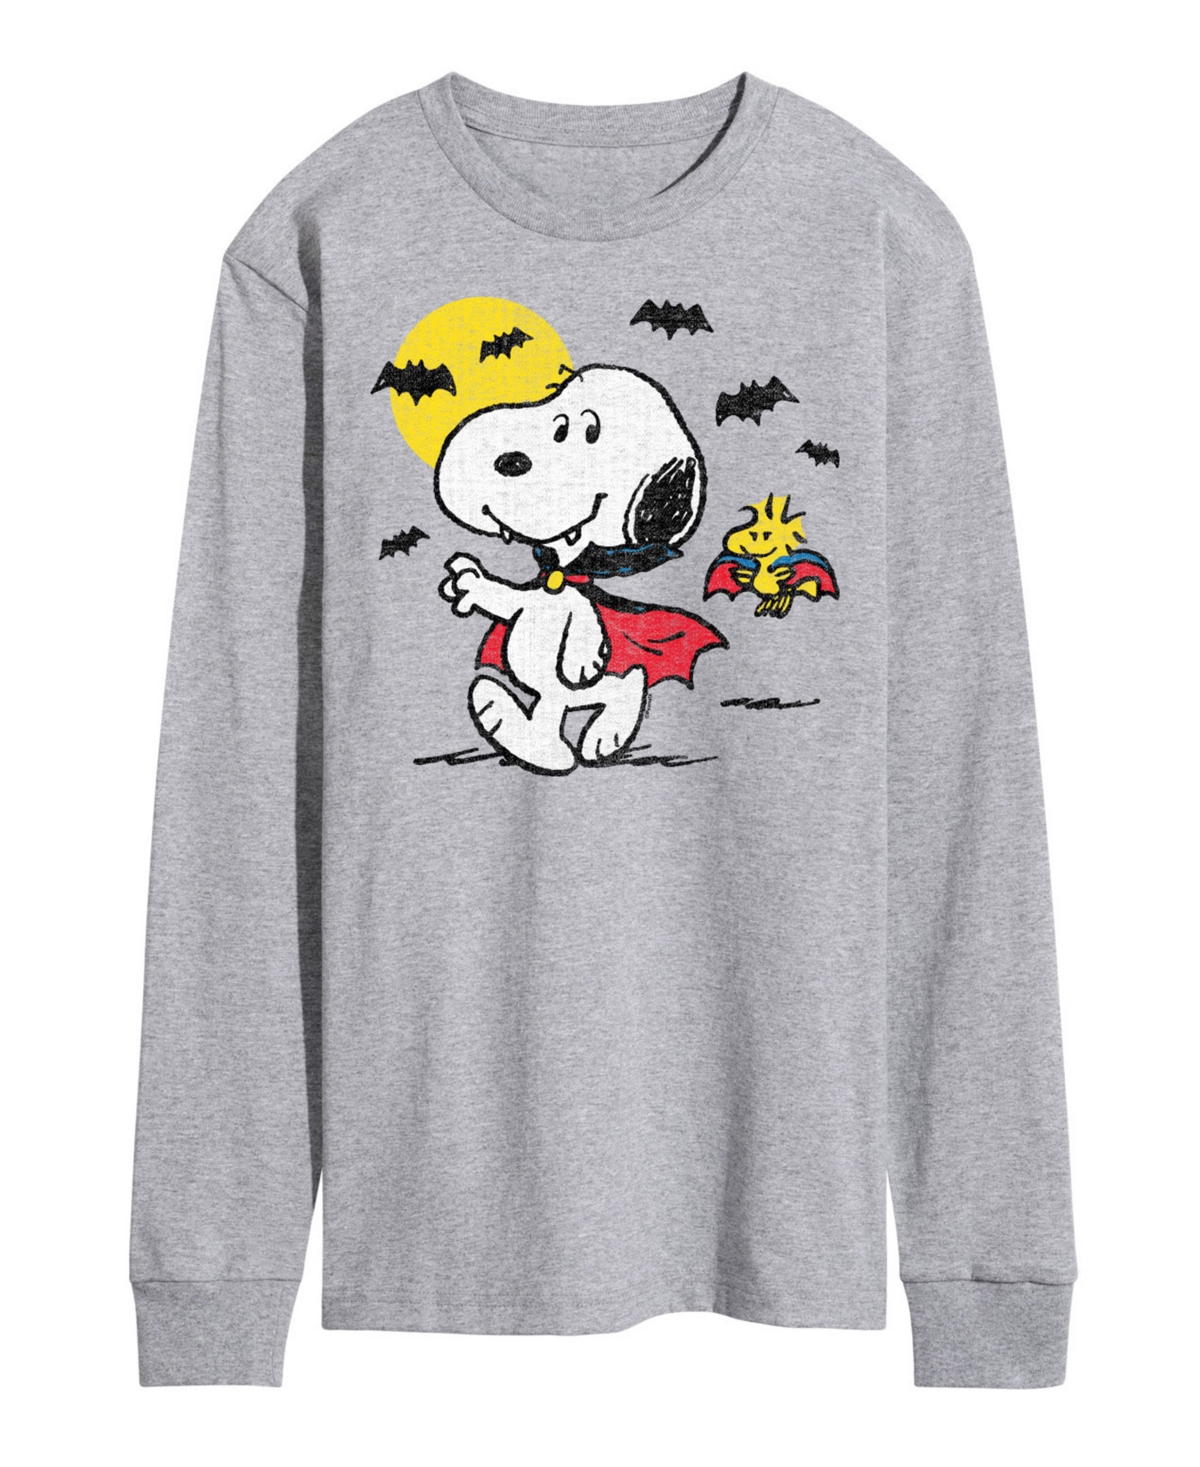 Airwaves Men's Peanuts Snoopy Vampire T-shirt